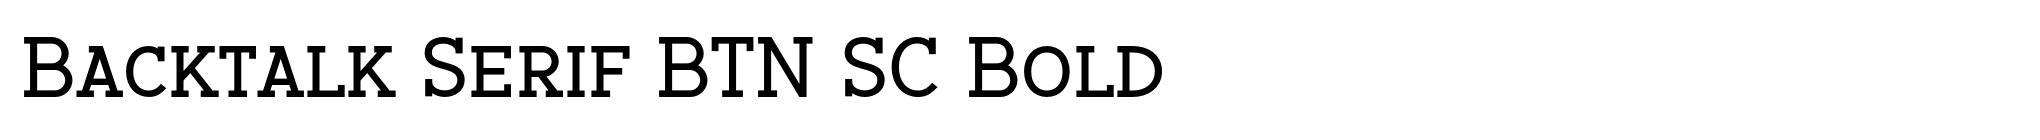 Backtalk Serif BTN SC Bold image